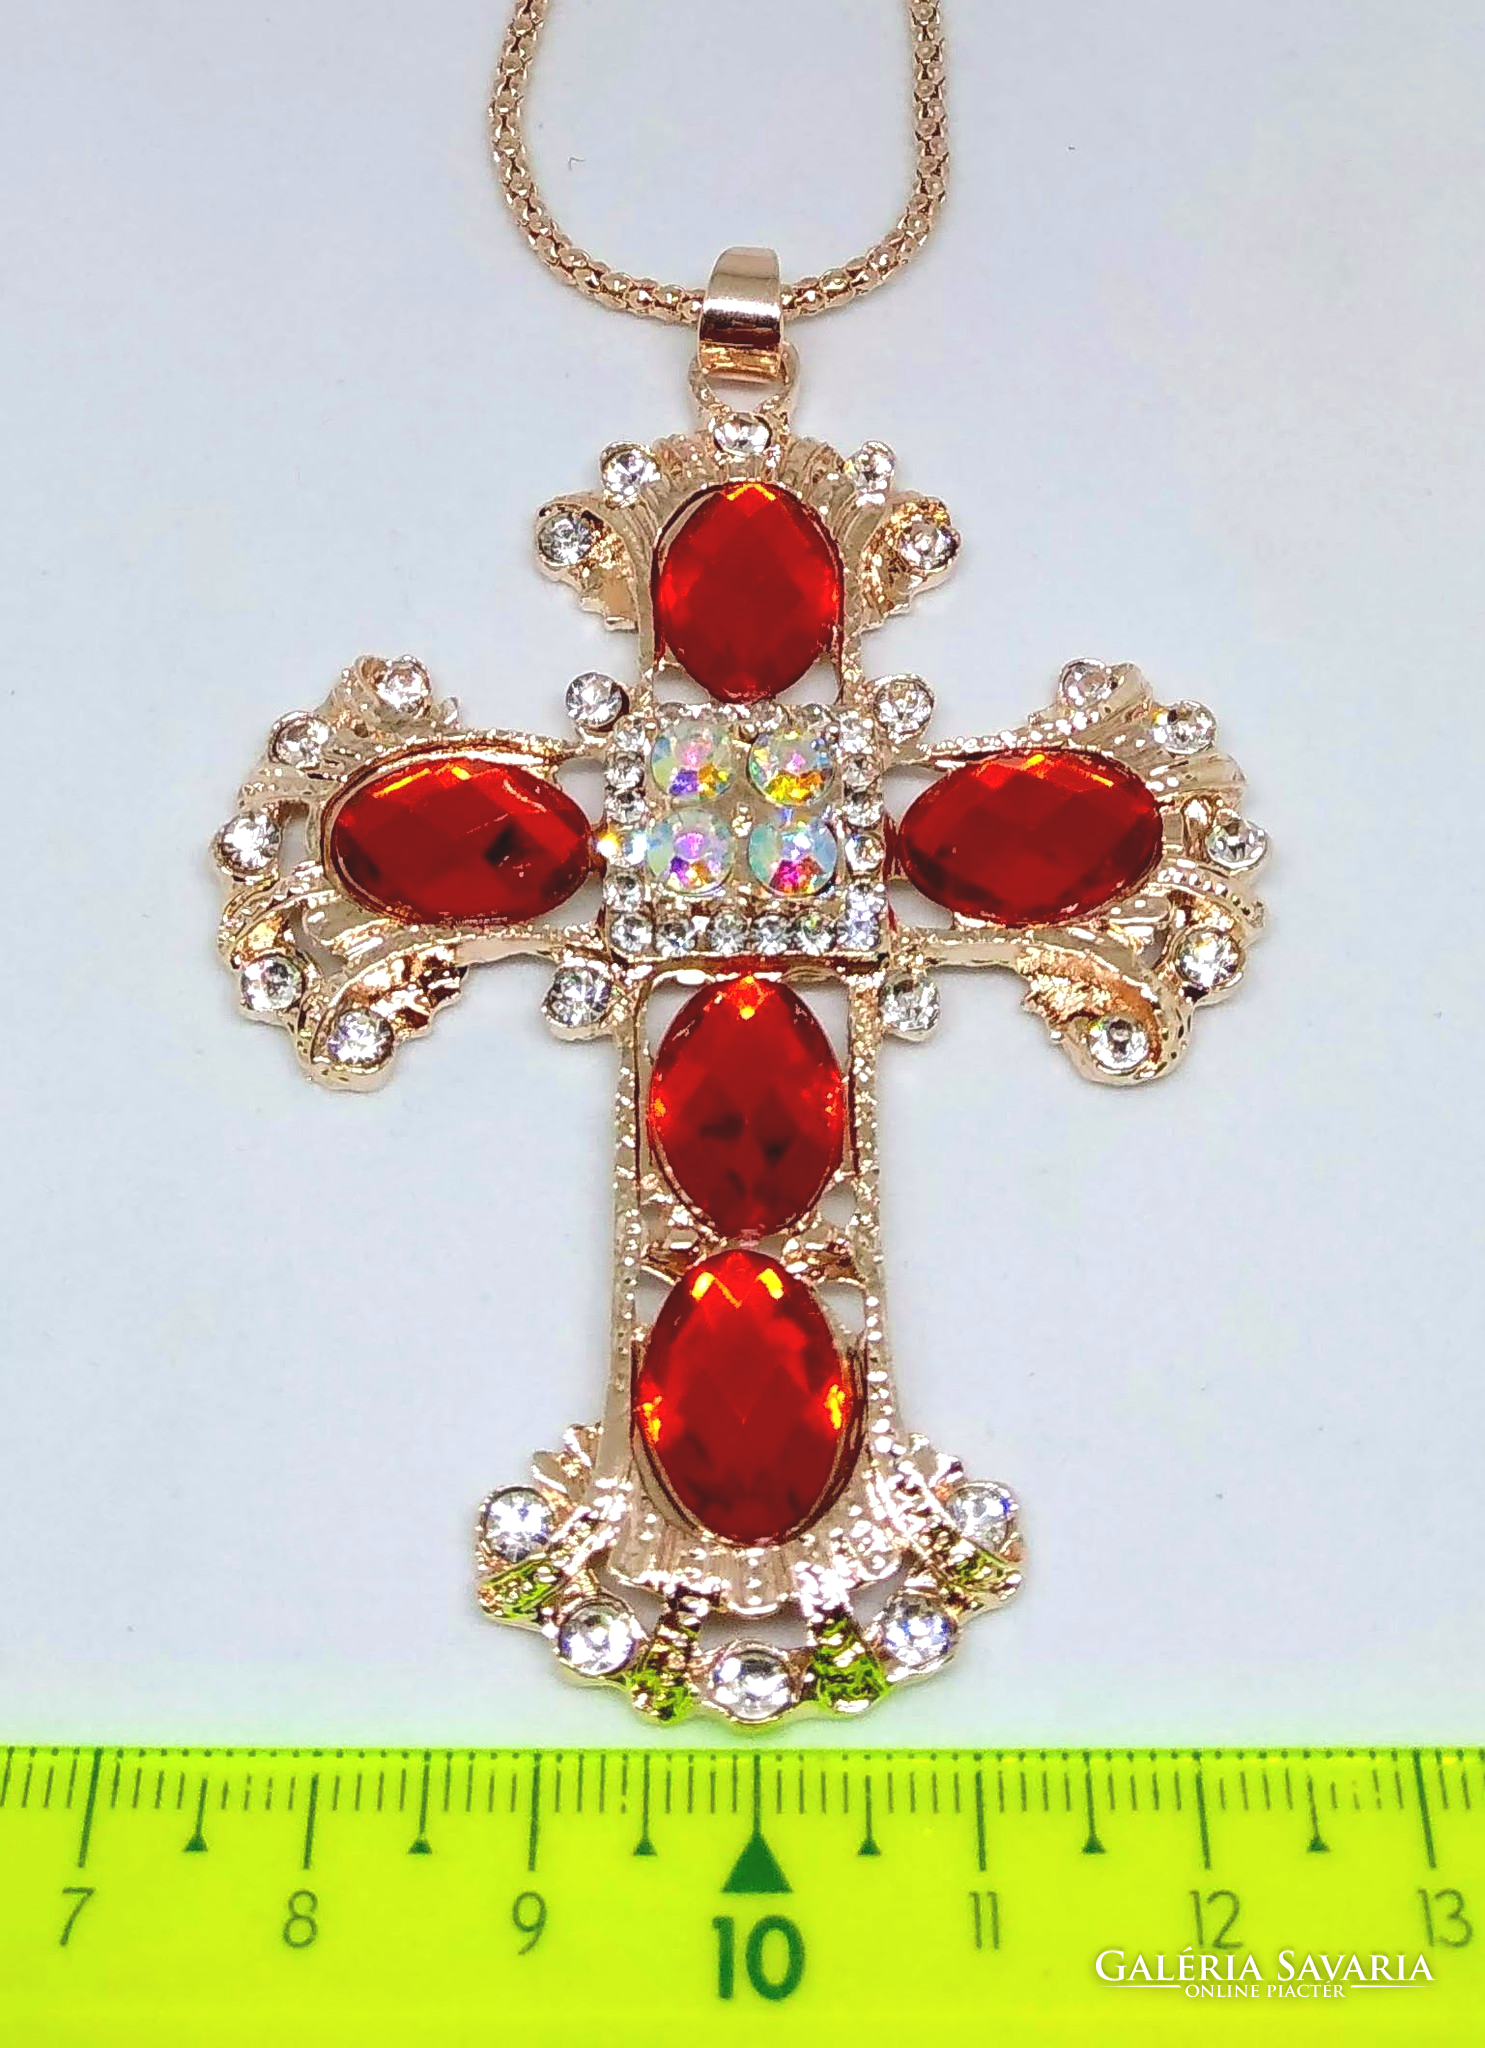 Betsey Johnson Gold Tone Colourful Cross Crucifix Pendant Necklace | eBay